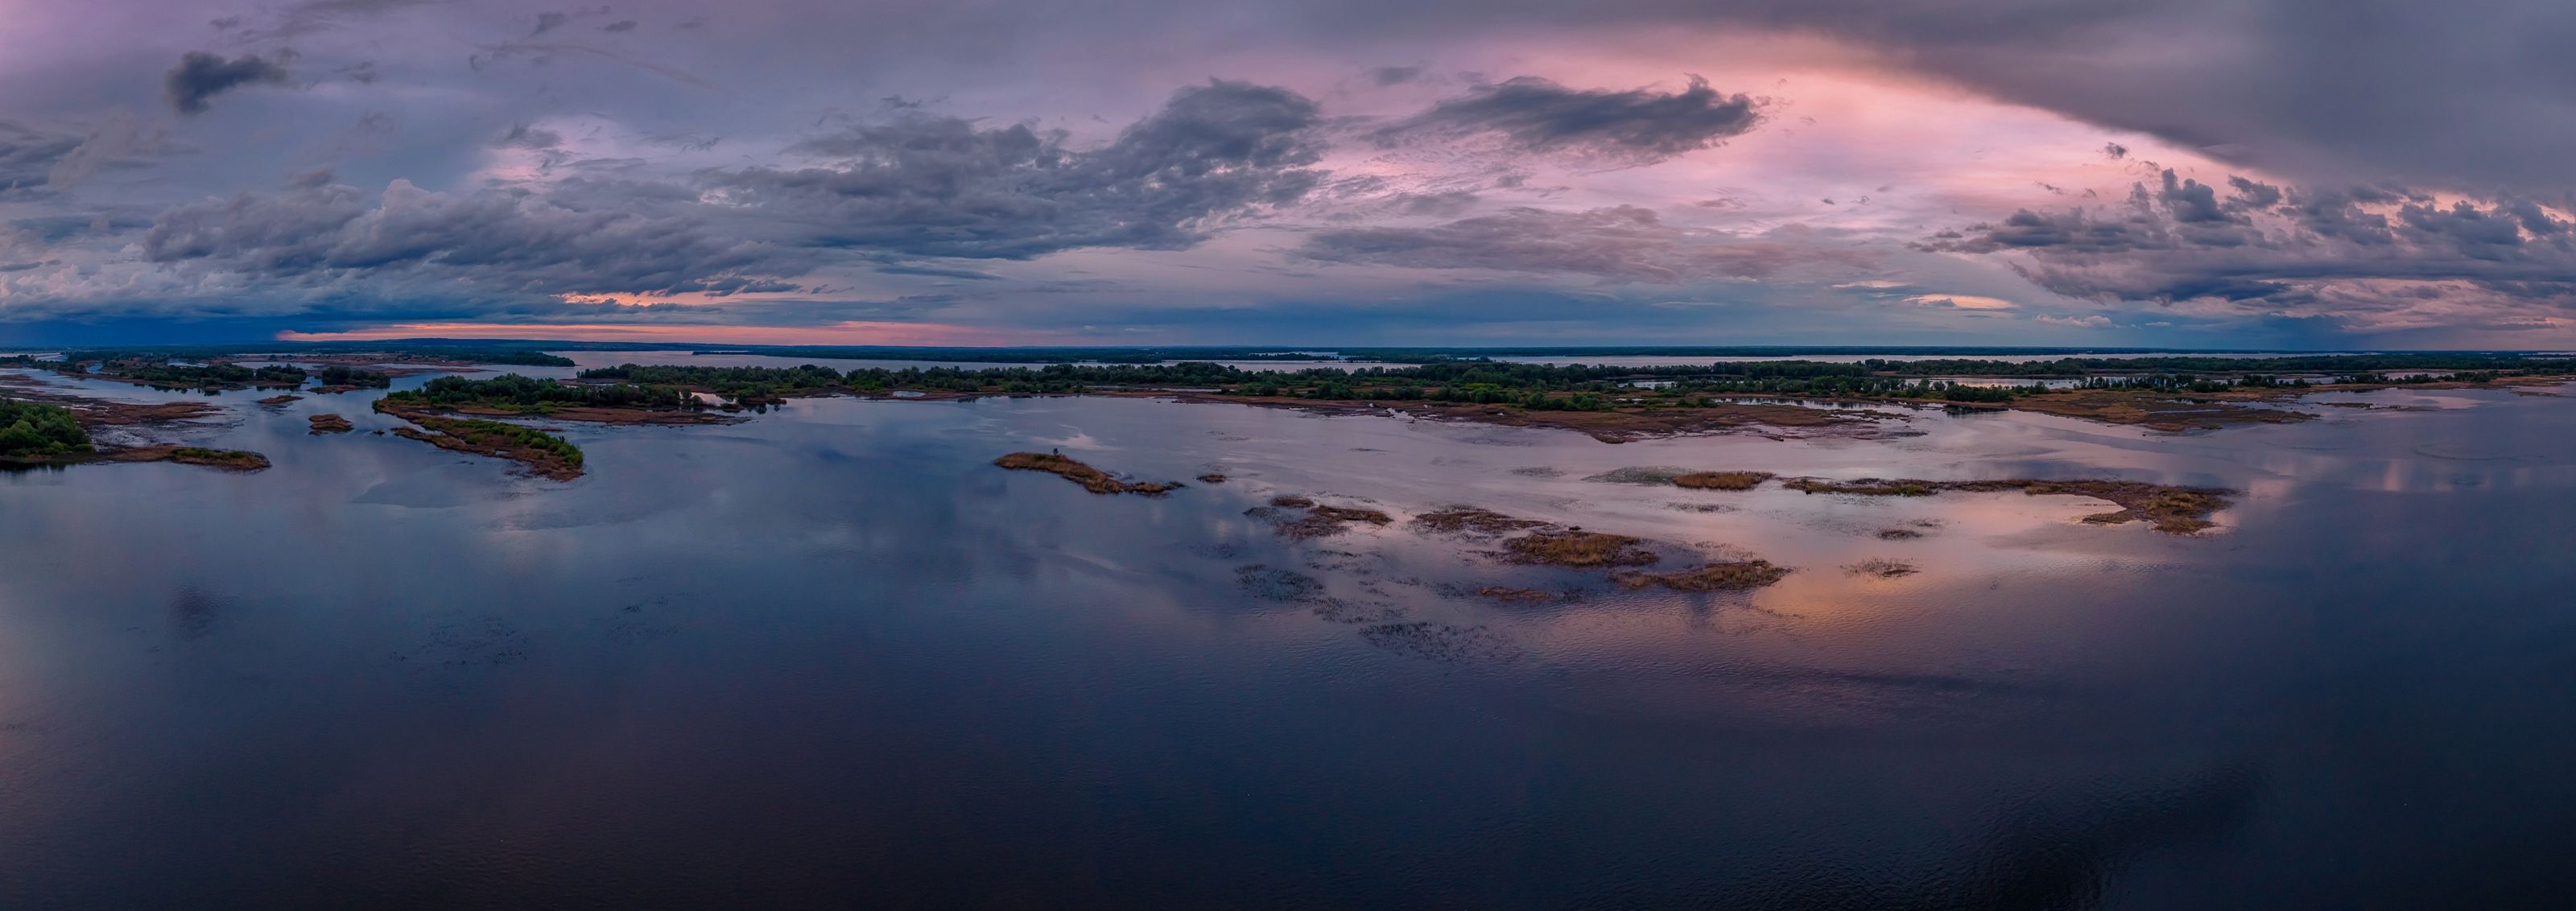 волга панорама река природа закат, Максим Подосинников